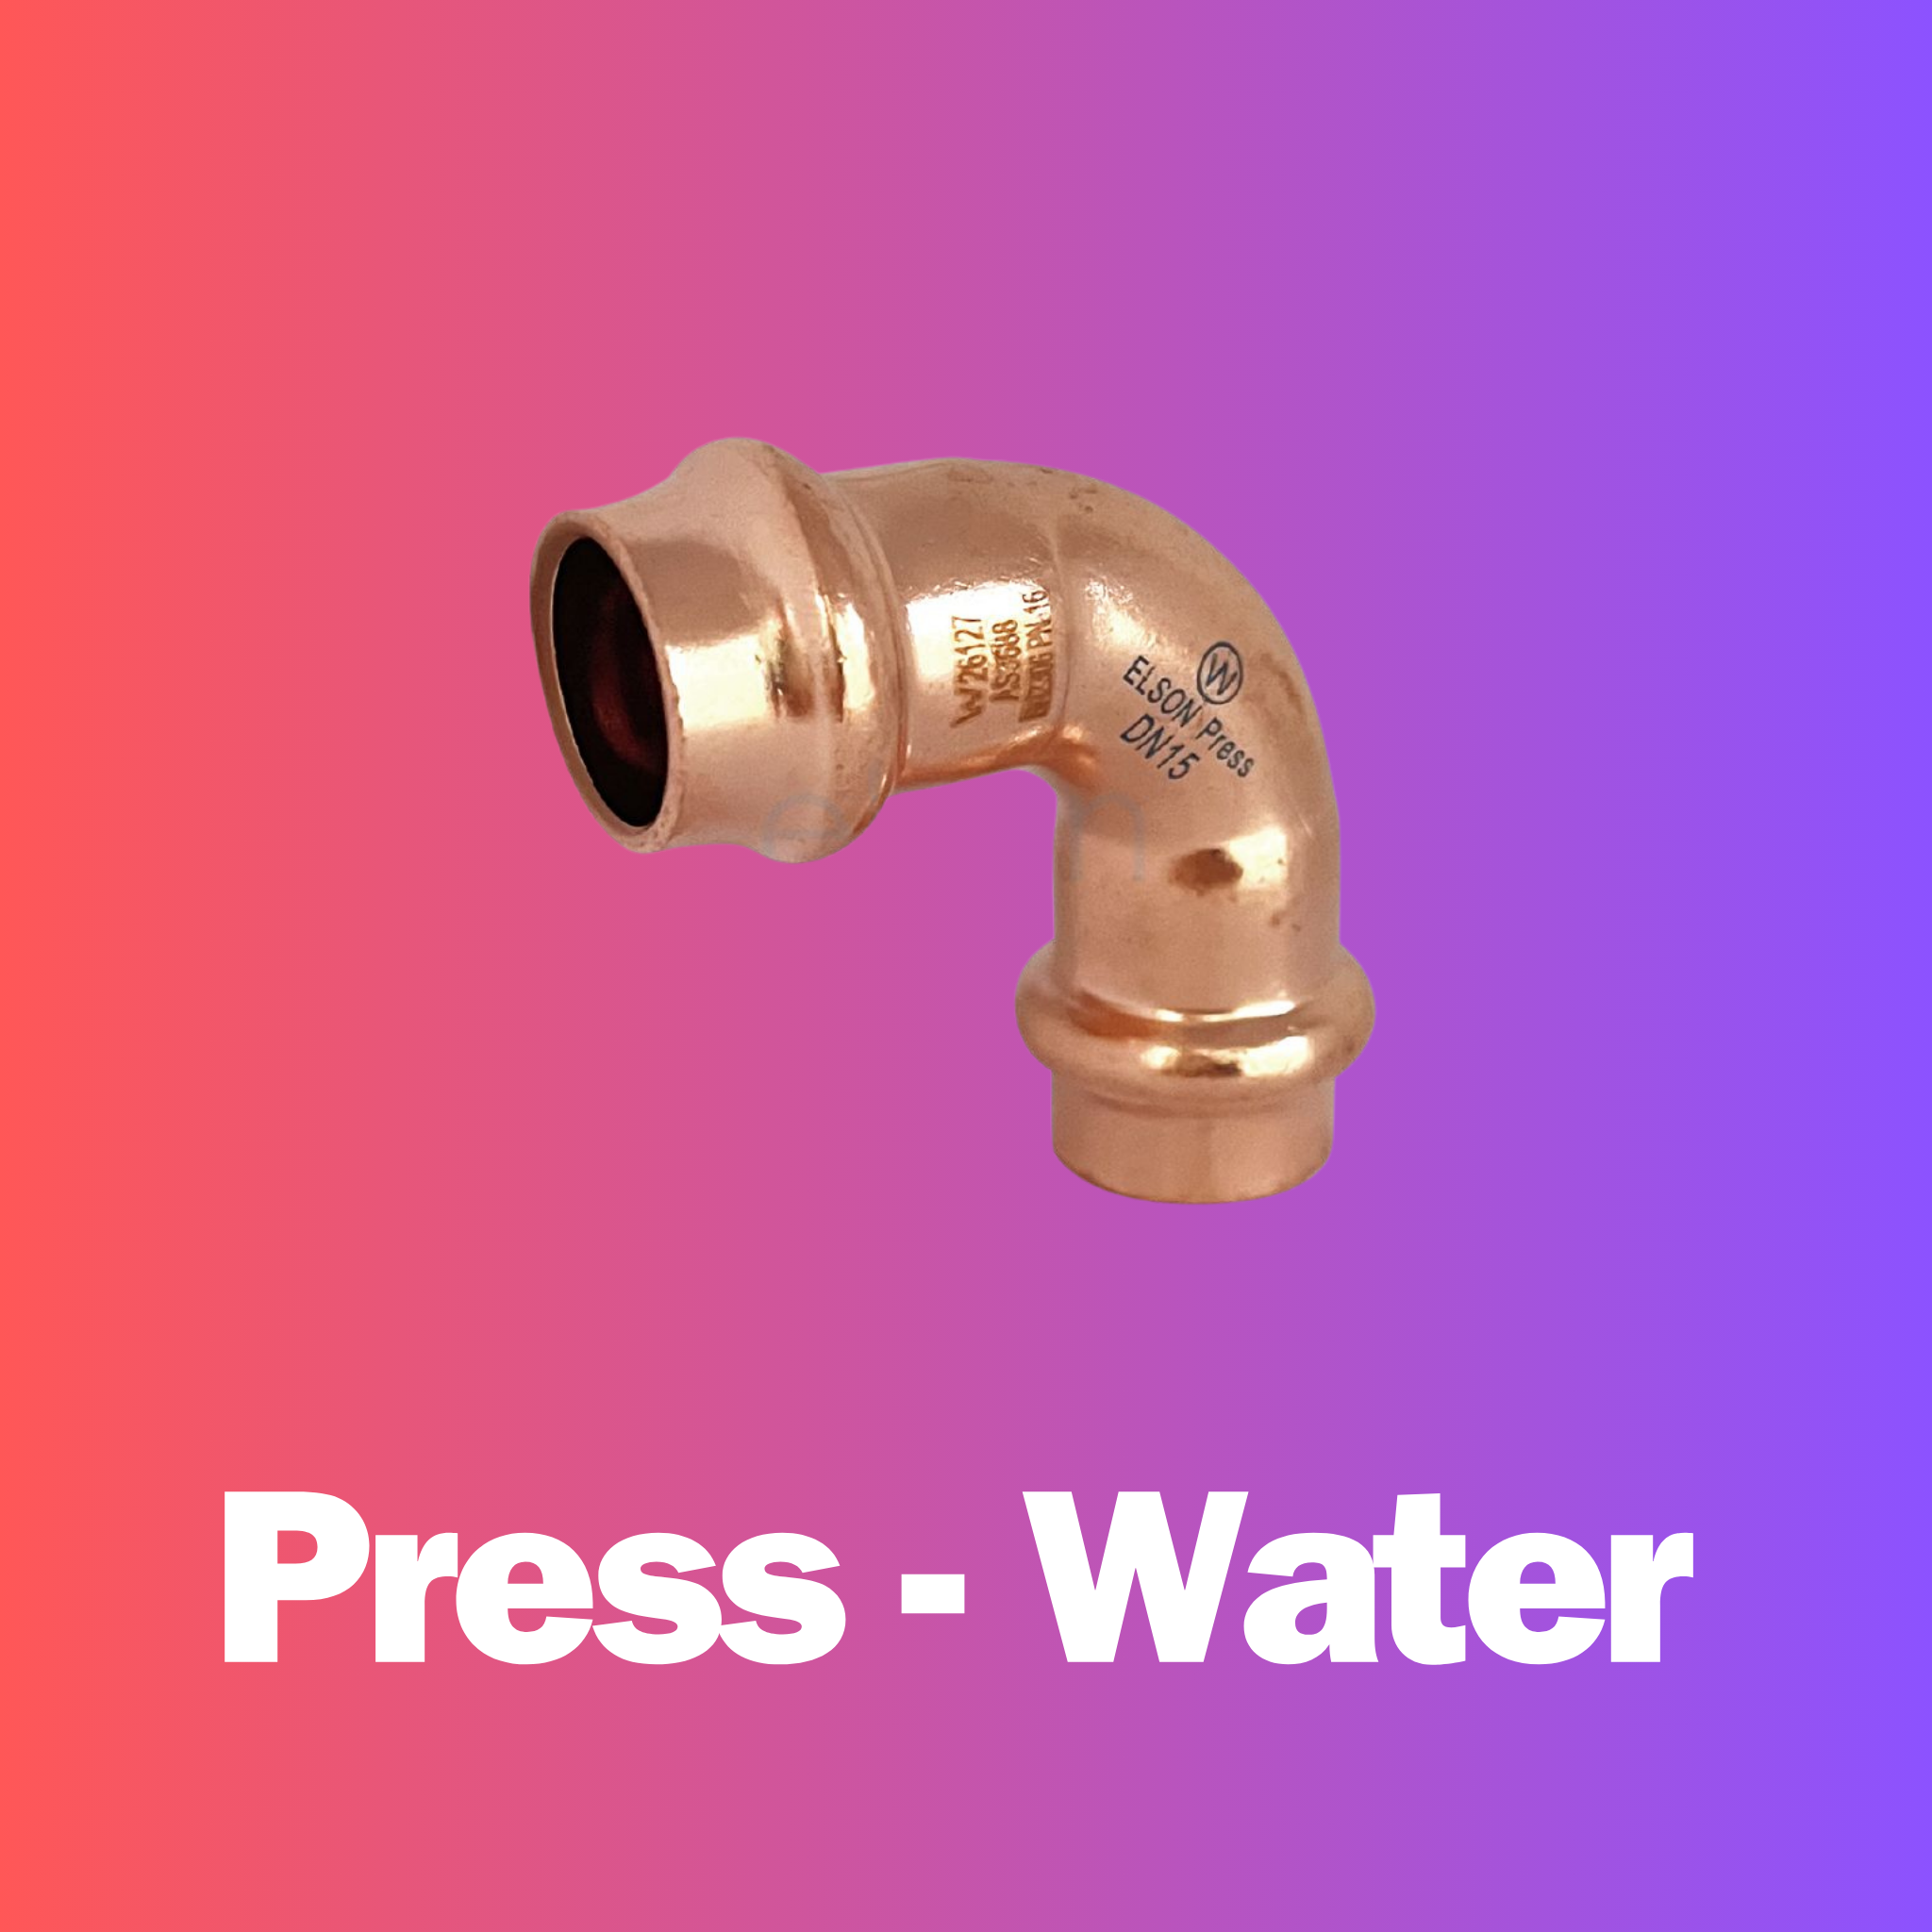 Water - Press